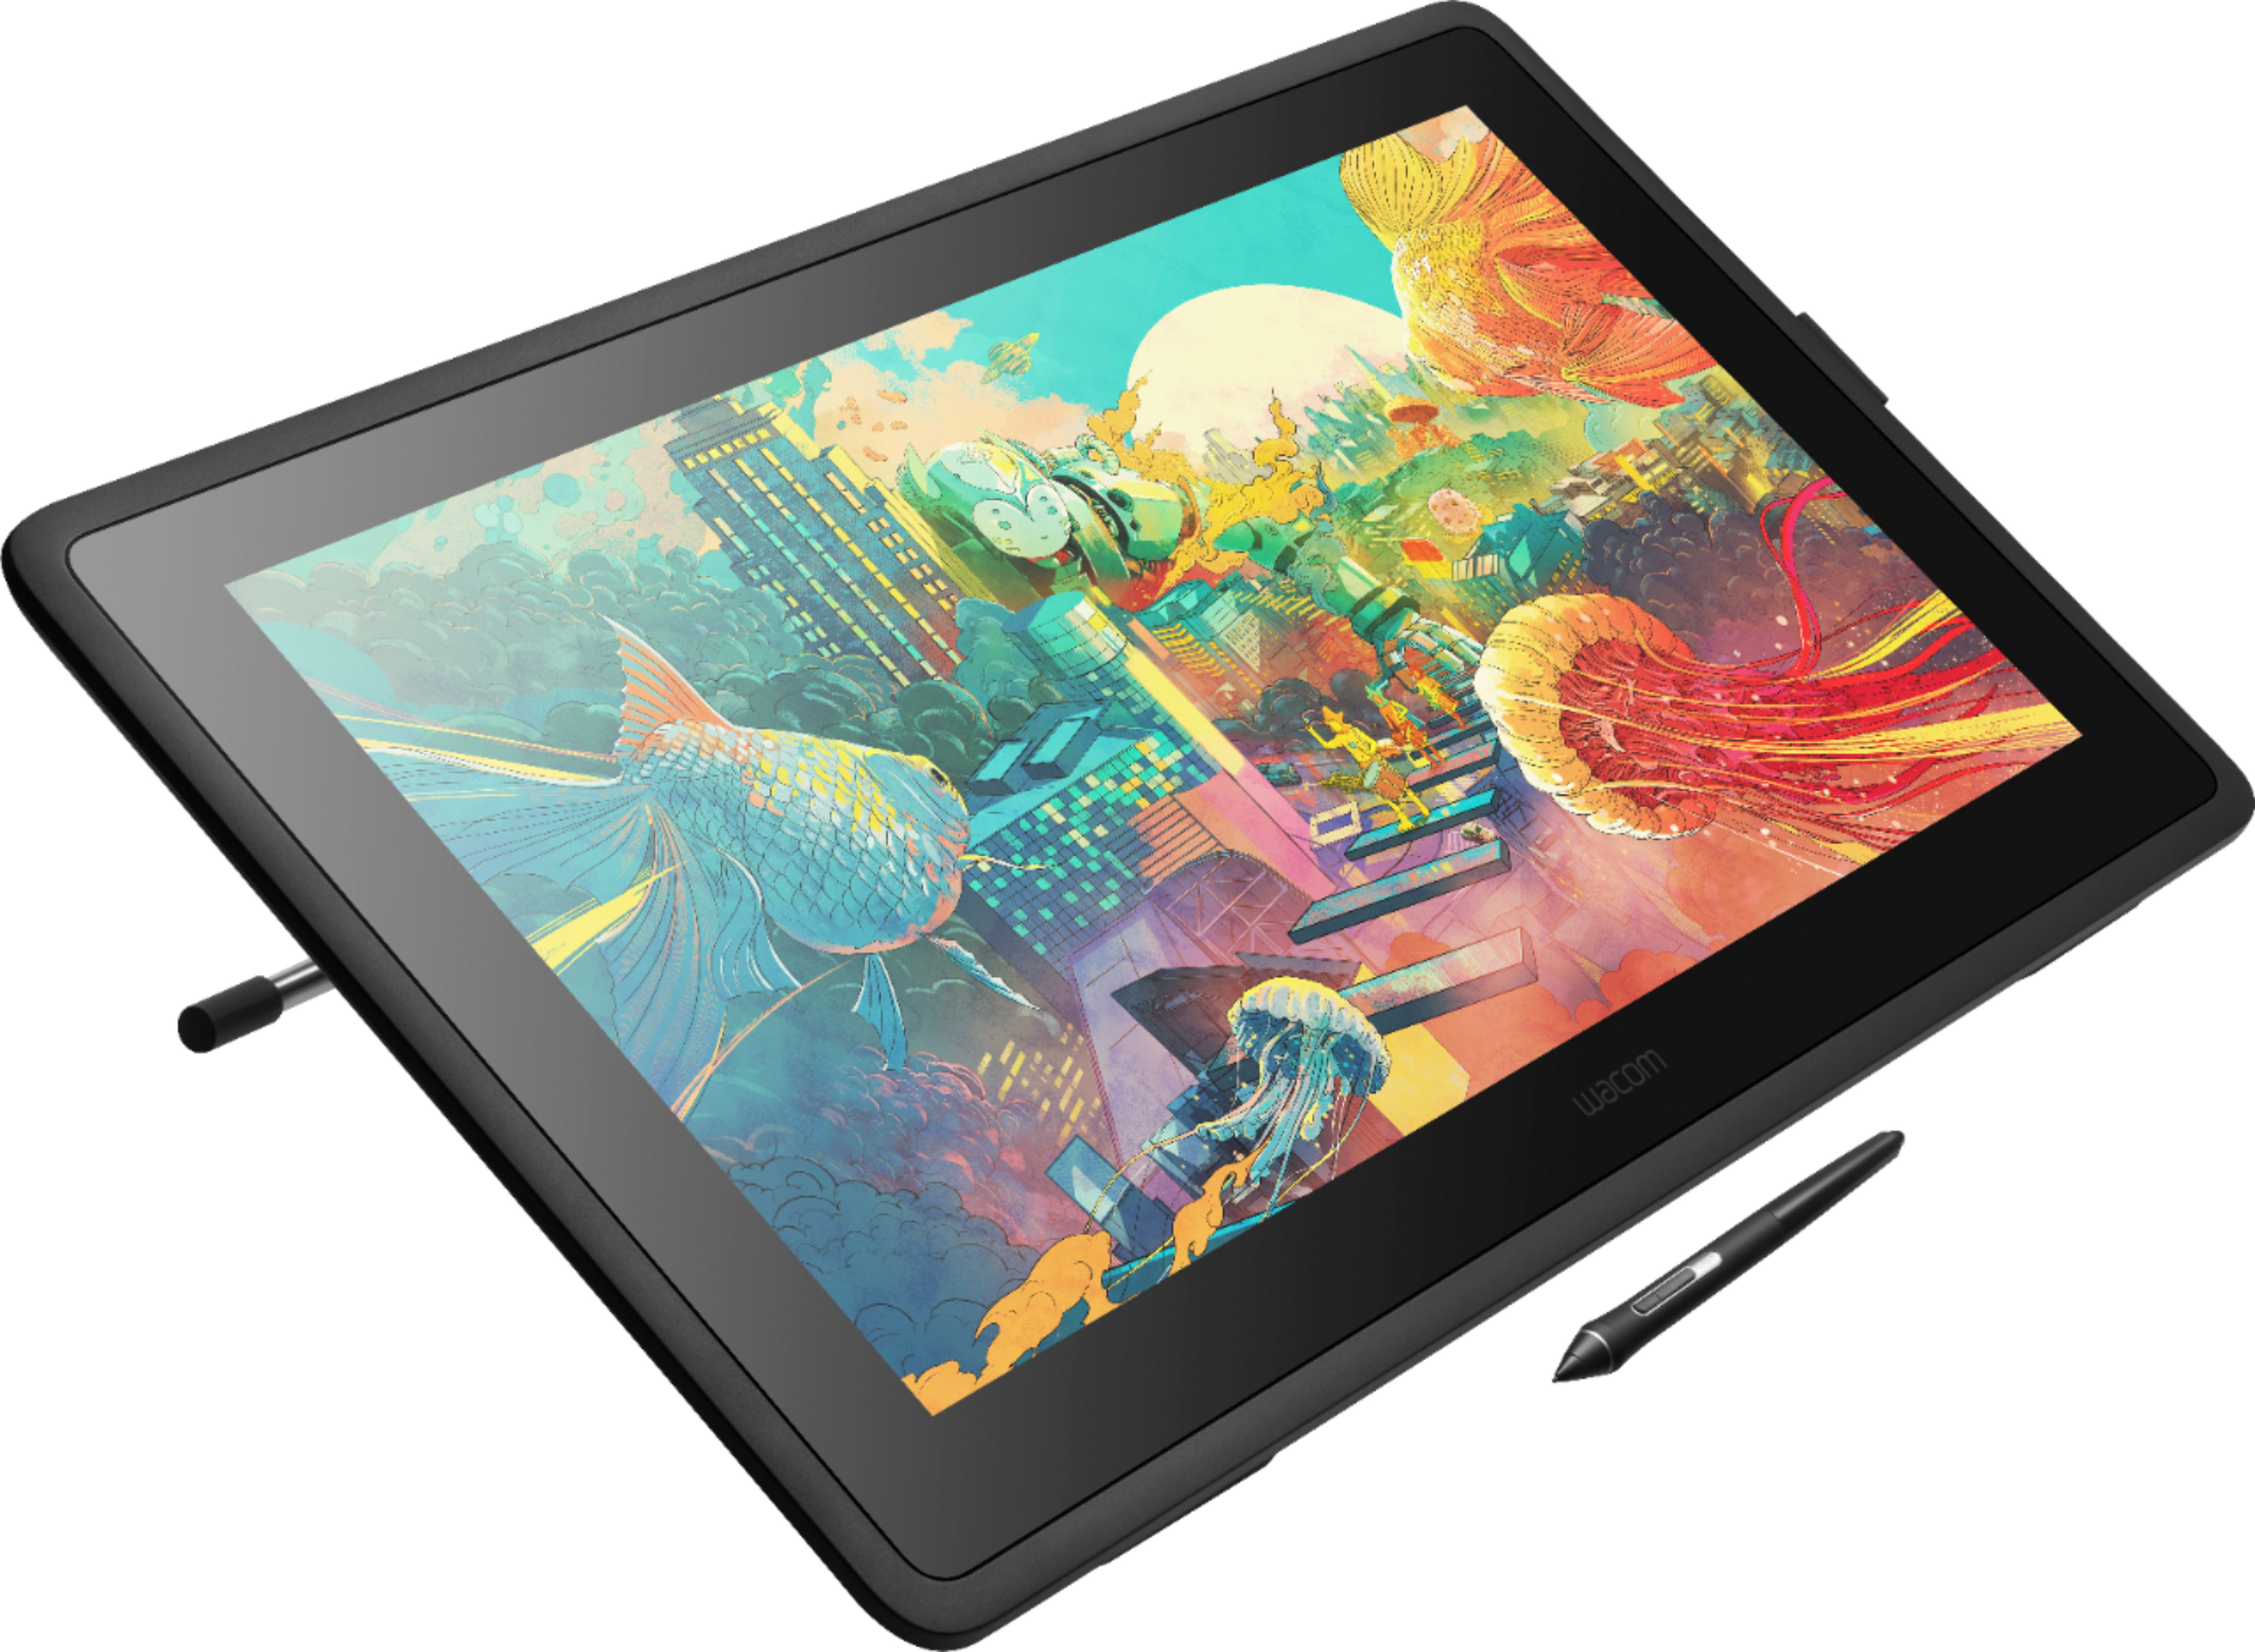 Wacom - Cintiq 22 Pen Display Drawing Tablet - Black | Okinus Online Shop